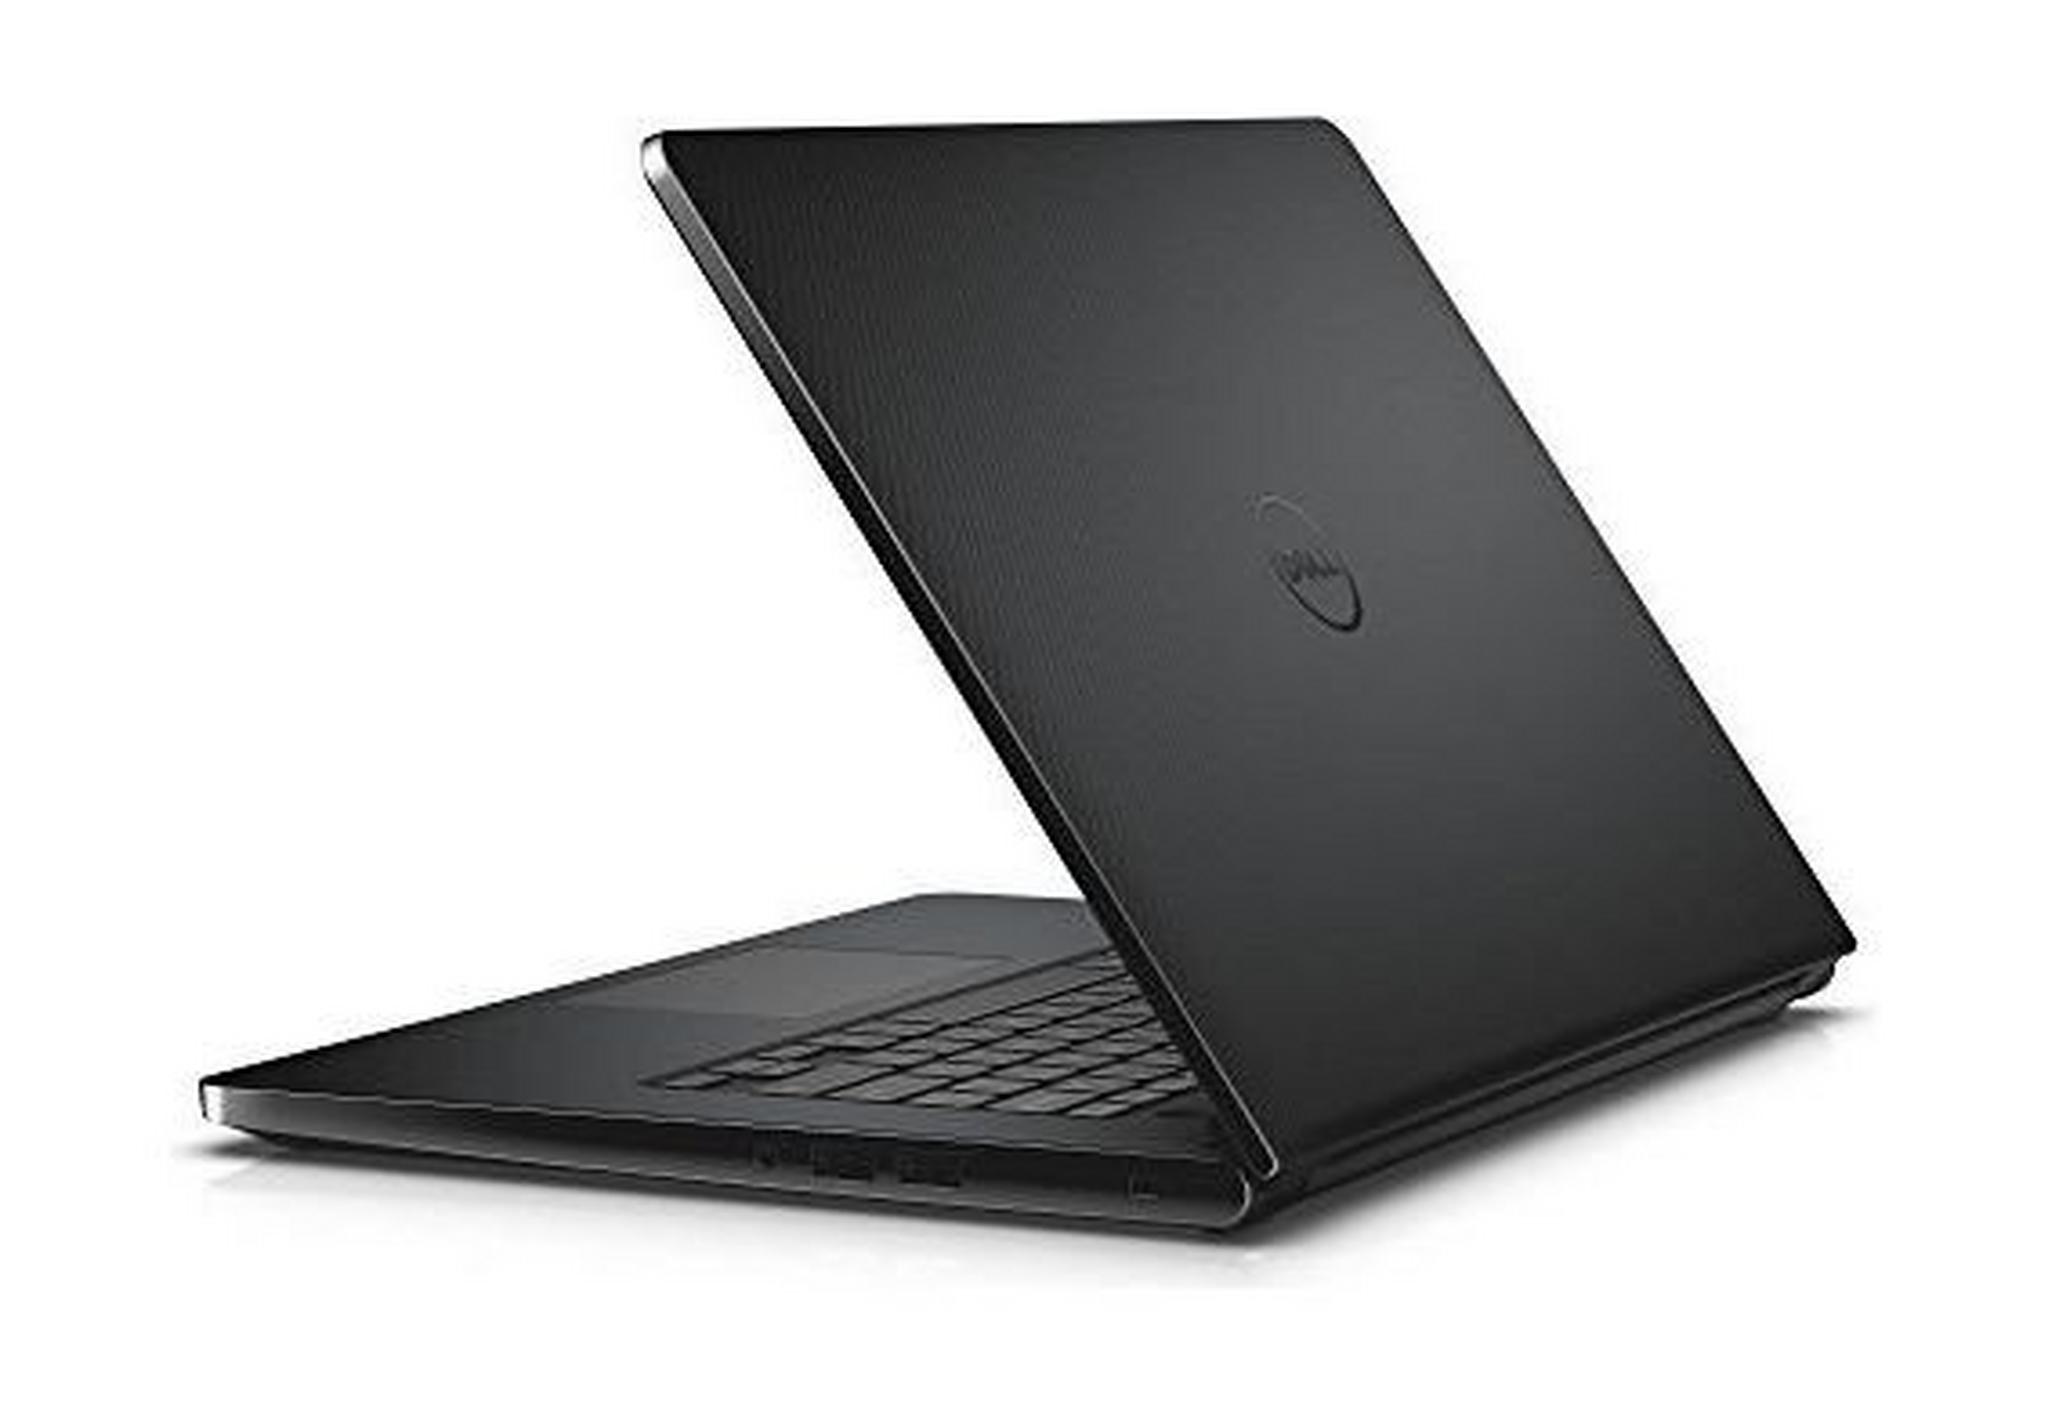 Dell Inspiron 3567-1052 15.6-inch Laptop, Core i3, 4GB RAM 500GB HDD – Black